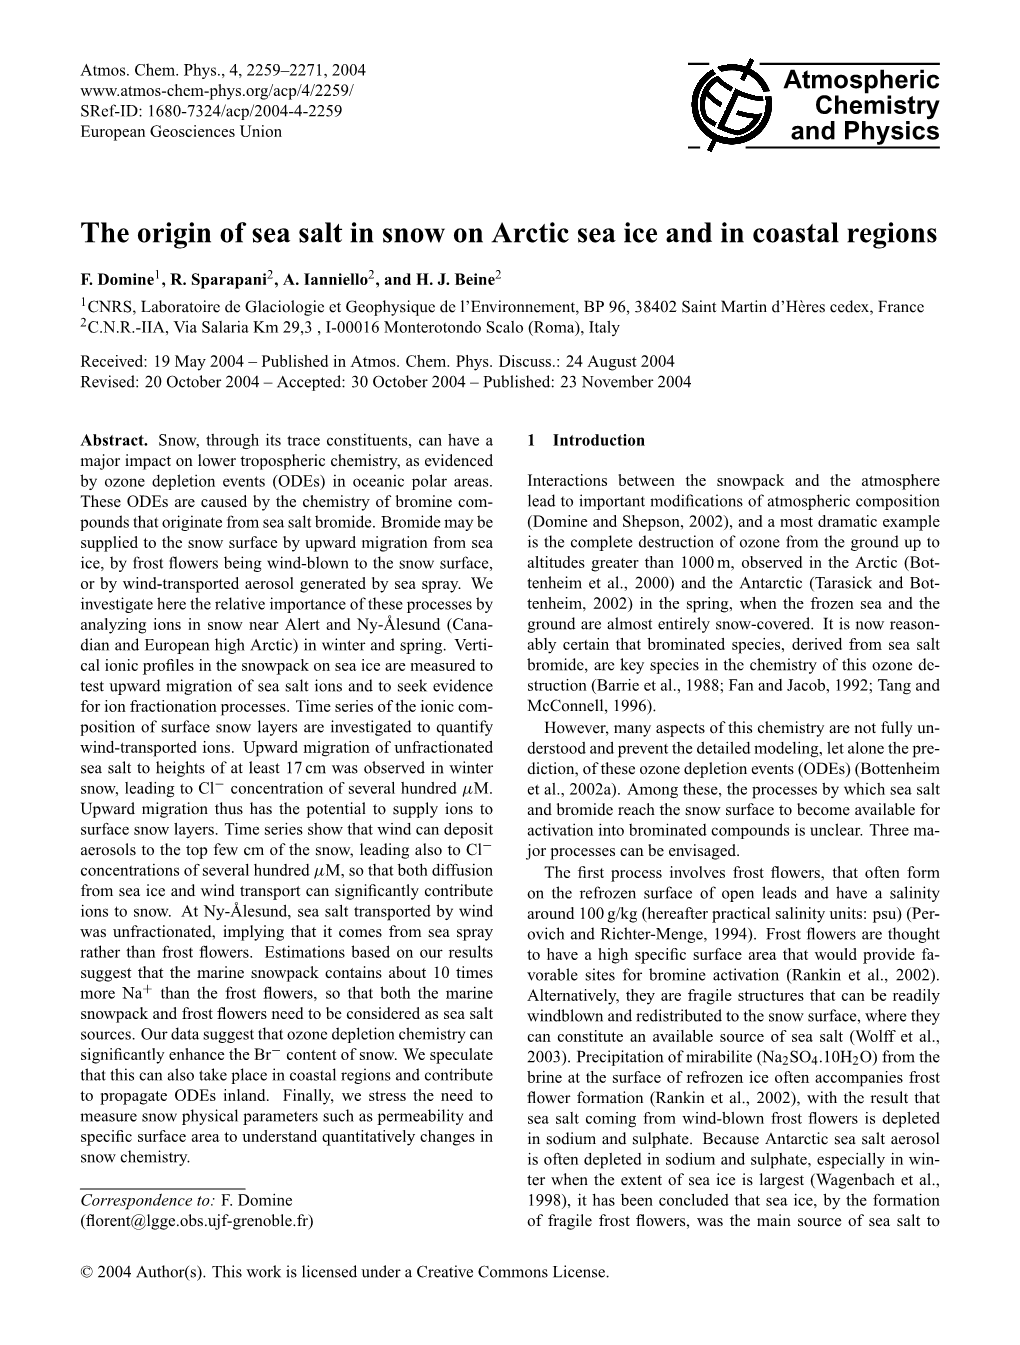 The Origin of Sea Salt in Snow on Arctic Sea Ice and in Coastal Regions